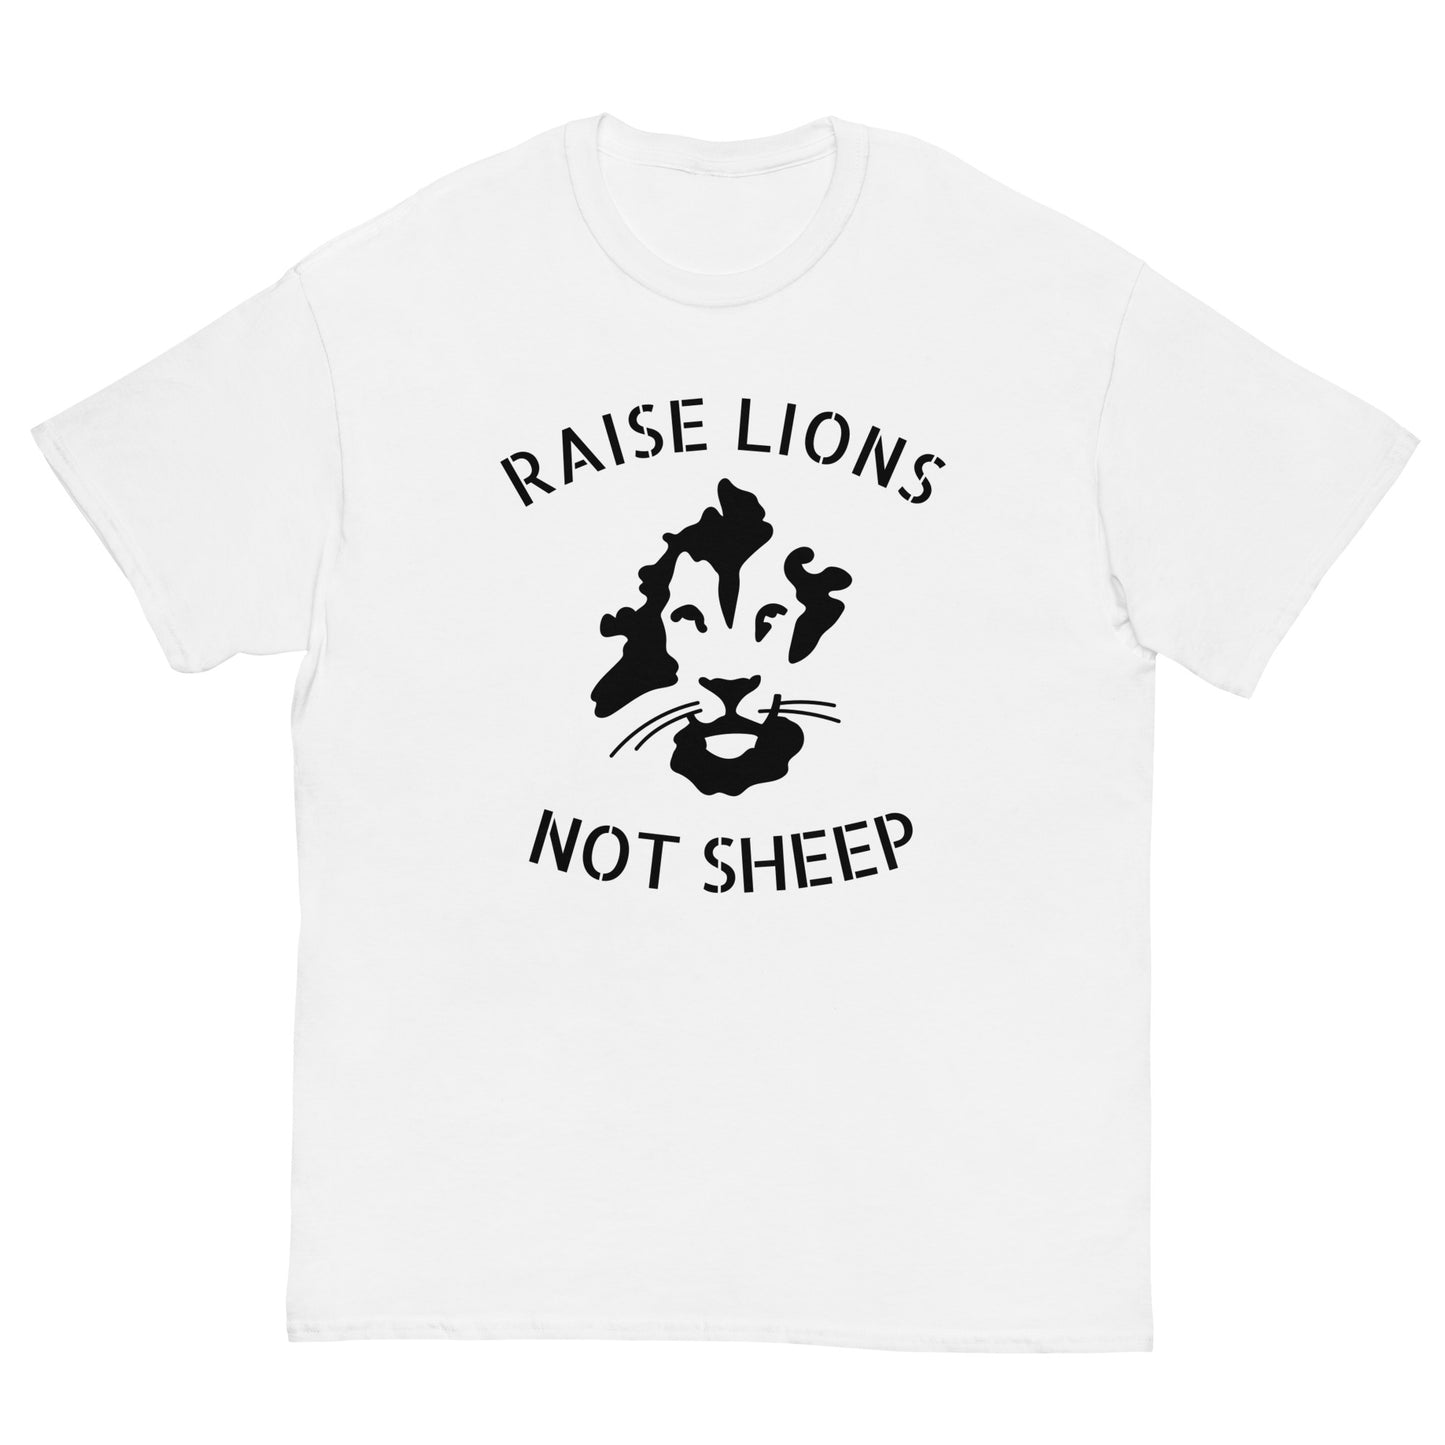 Raise LIONS, not sheep - Classic tee